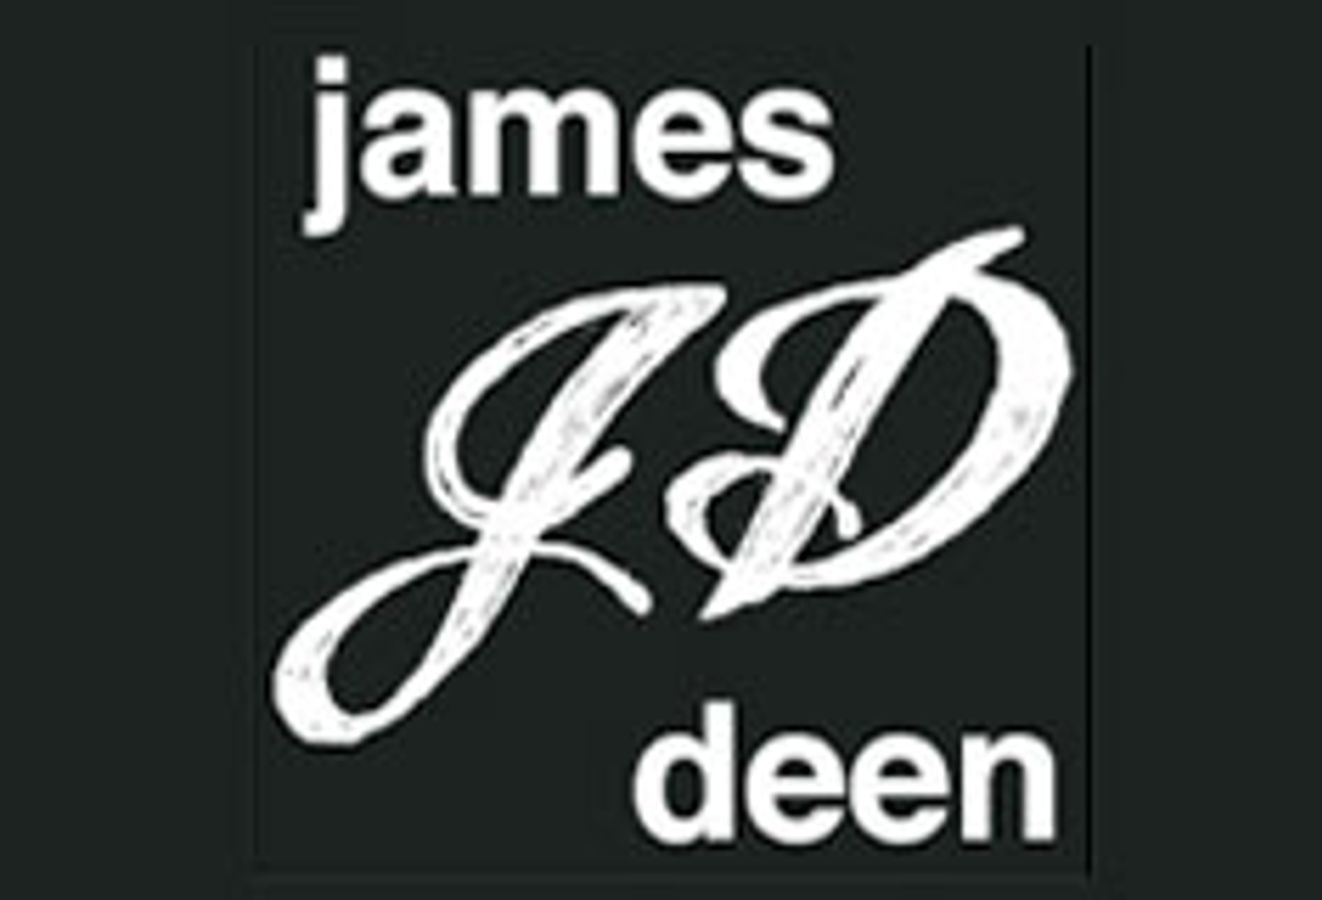 James Deen Productions